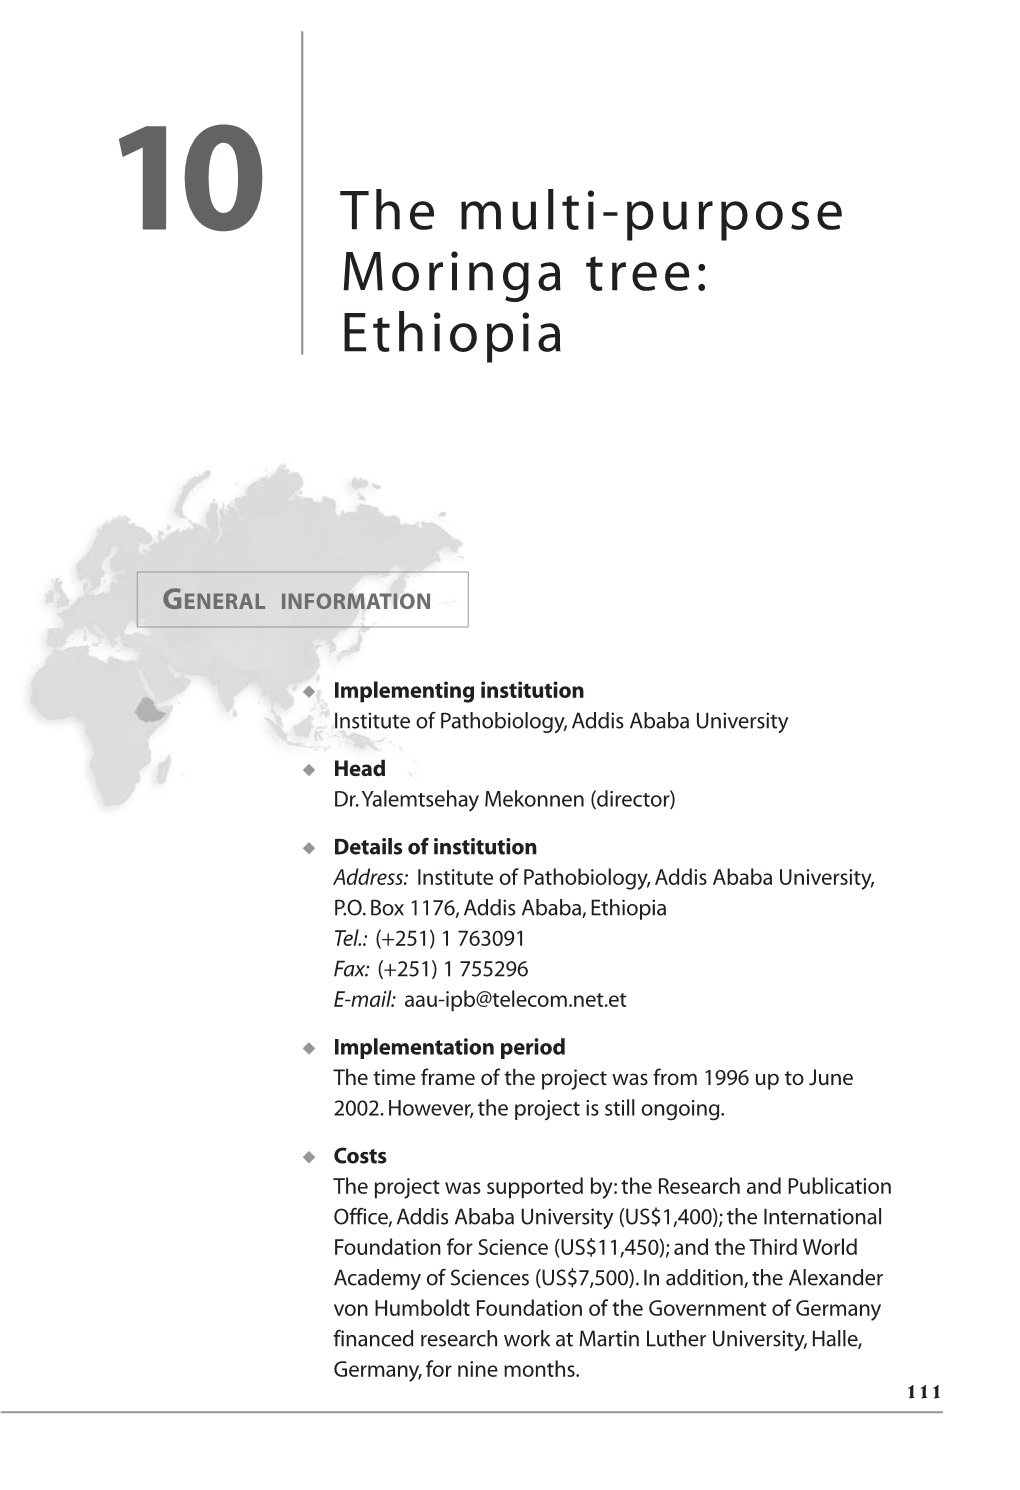 The Multi-Purpose Moringa Tree: Ethiopia